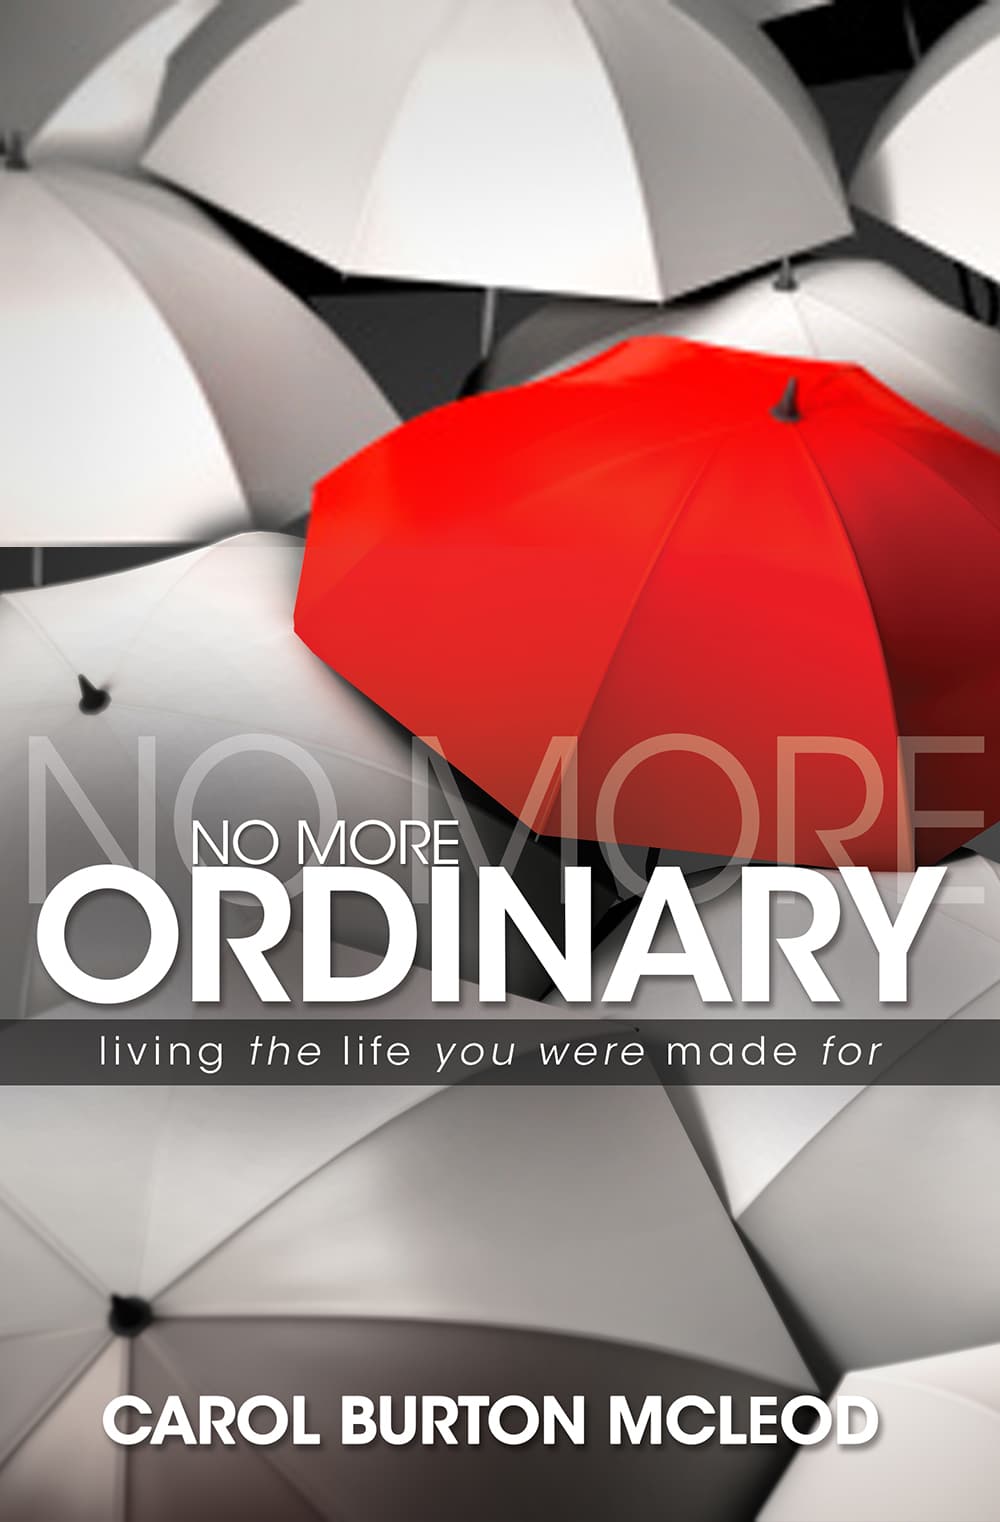 No More Ordinary